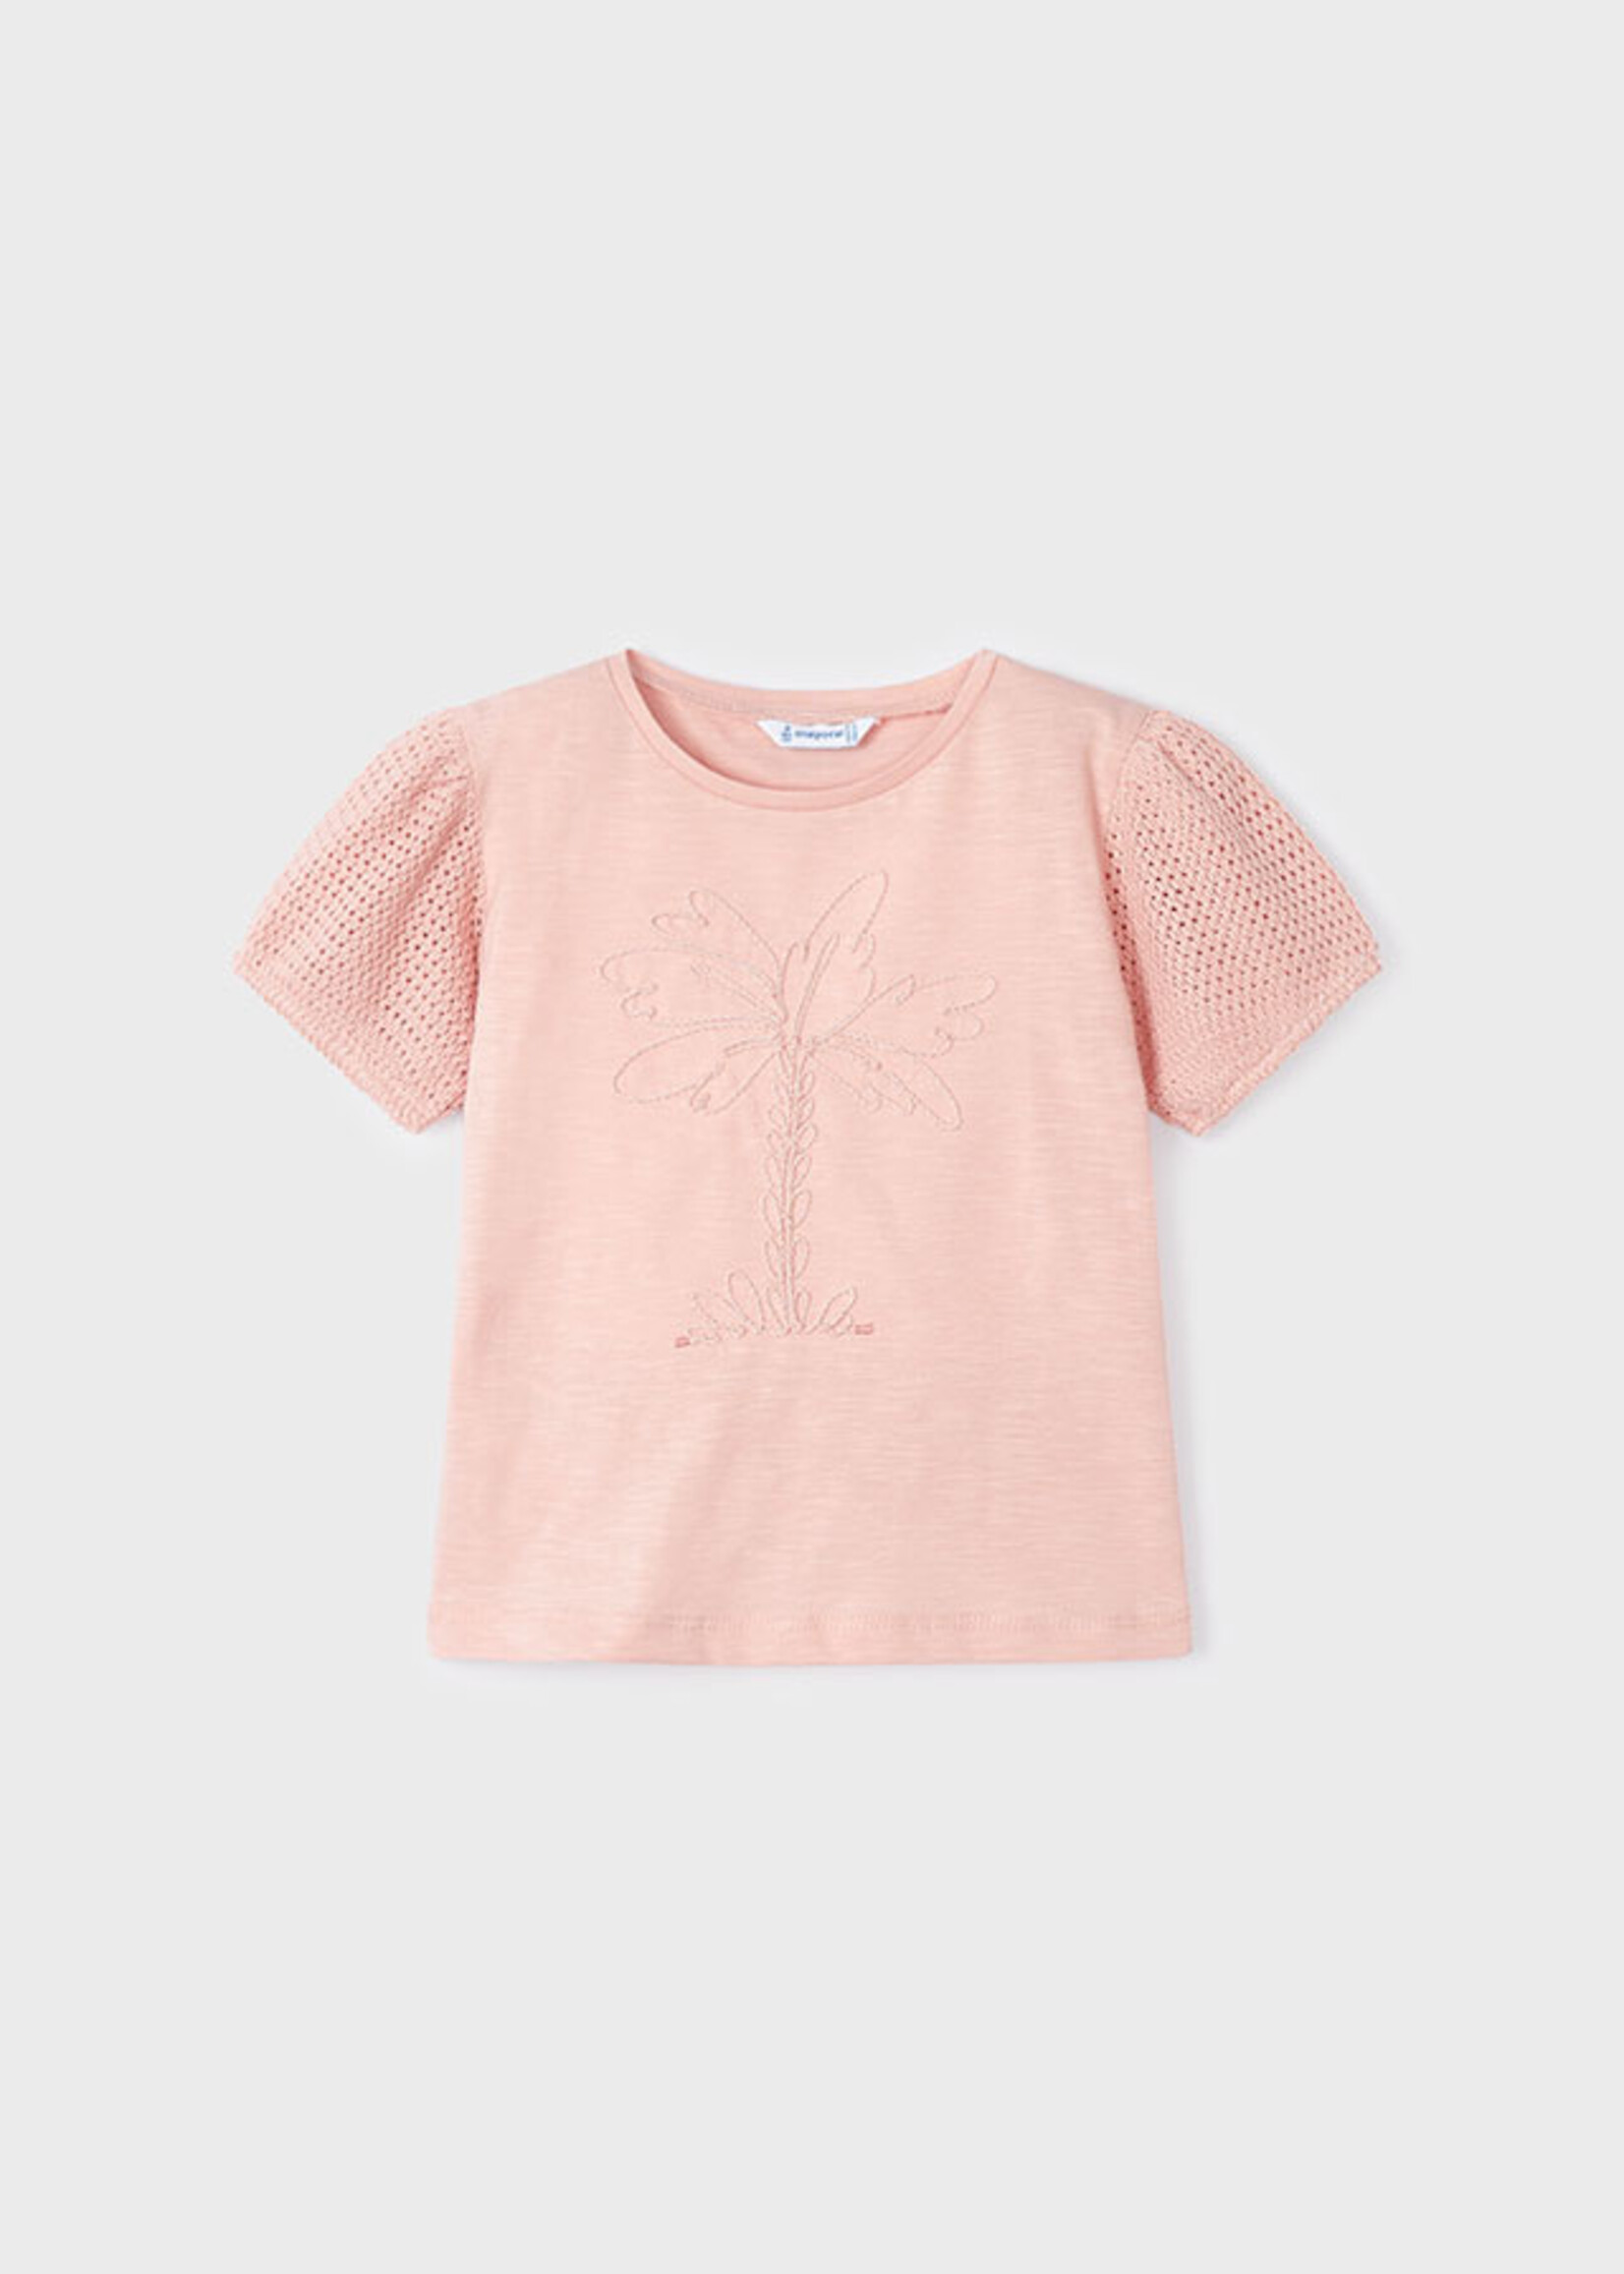 Mayoral Mini Girl            3085 S/s t-shirt                   Blush